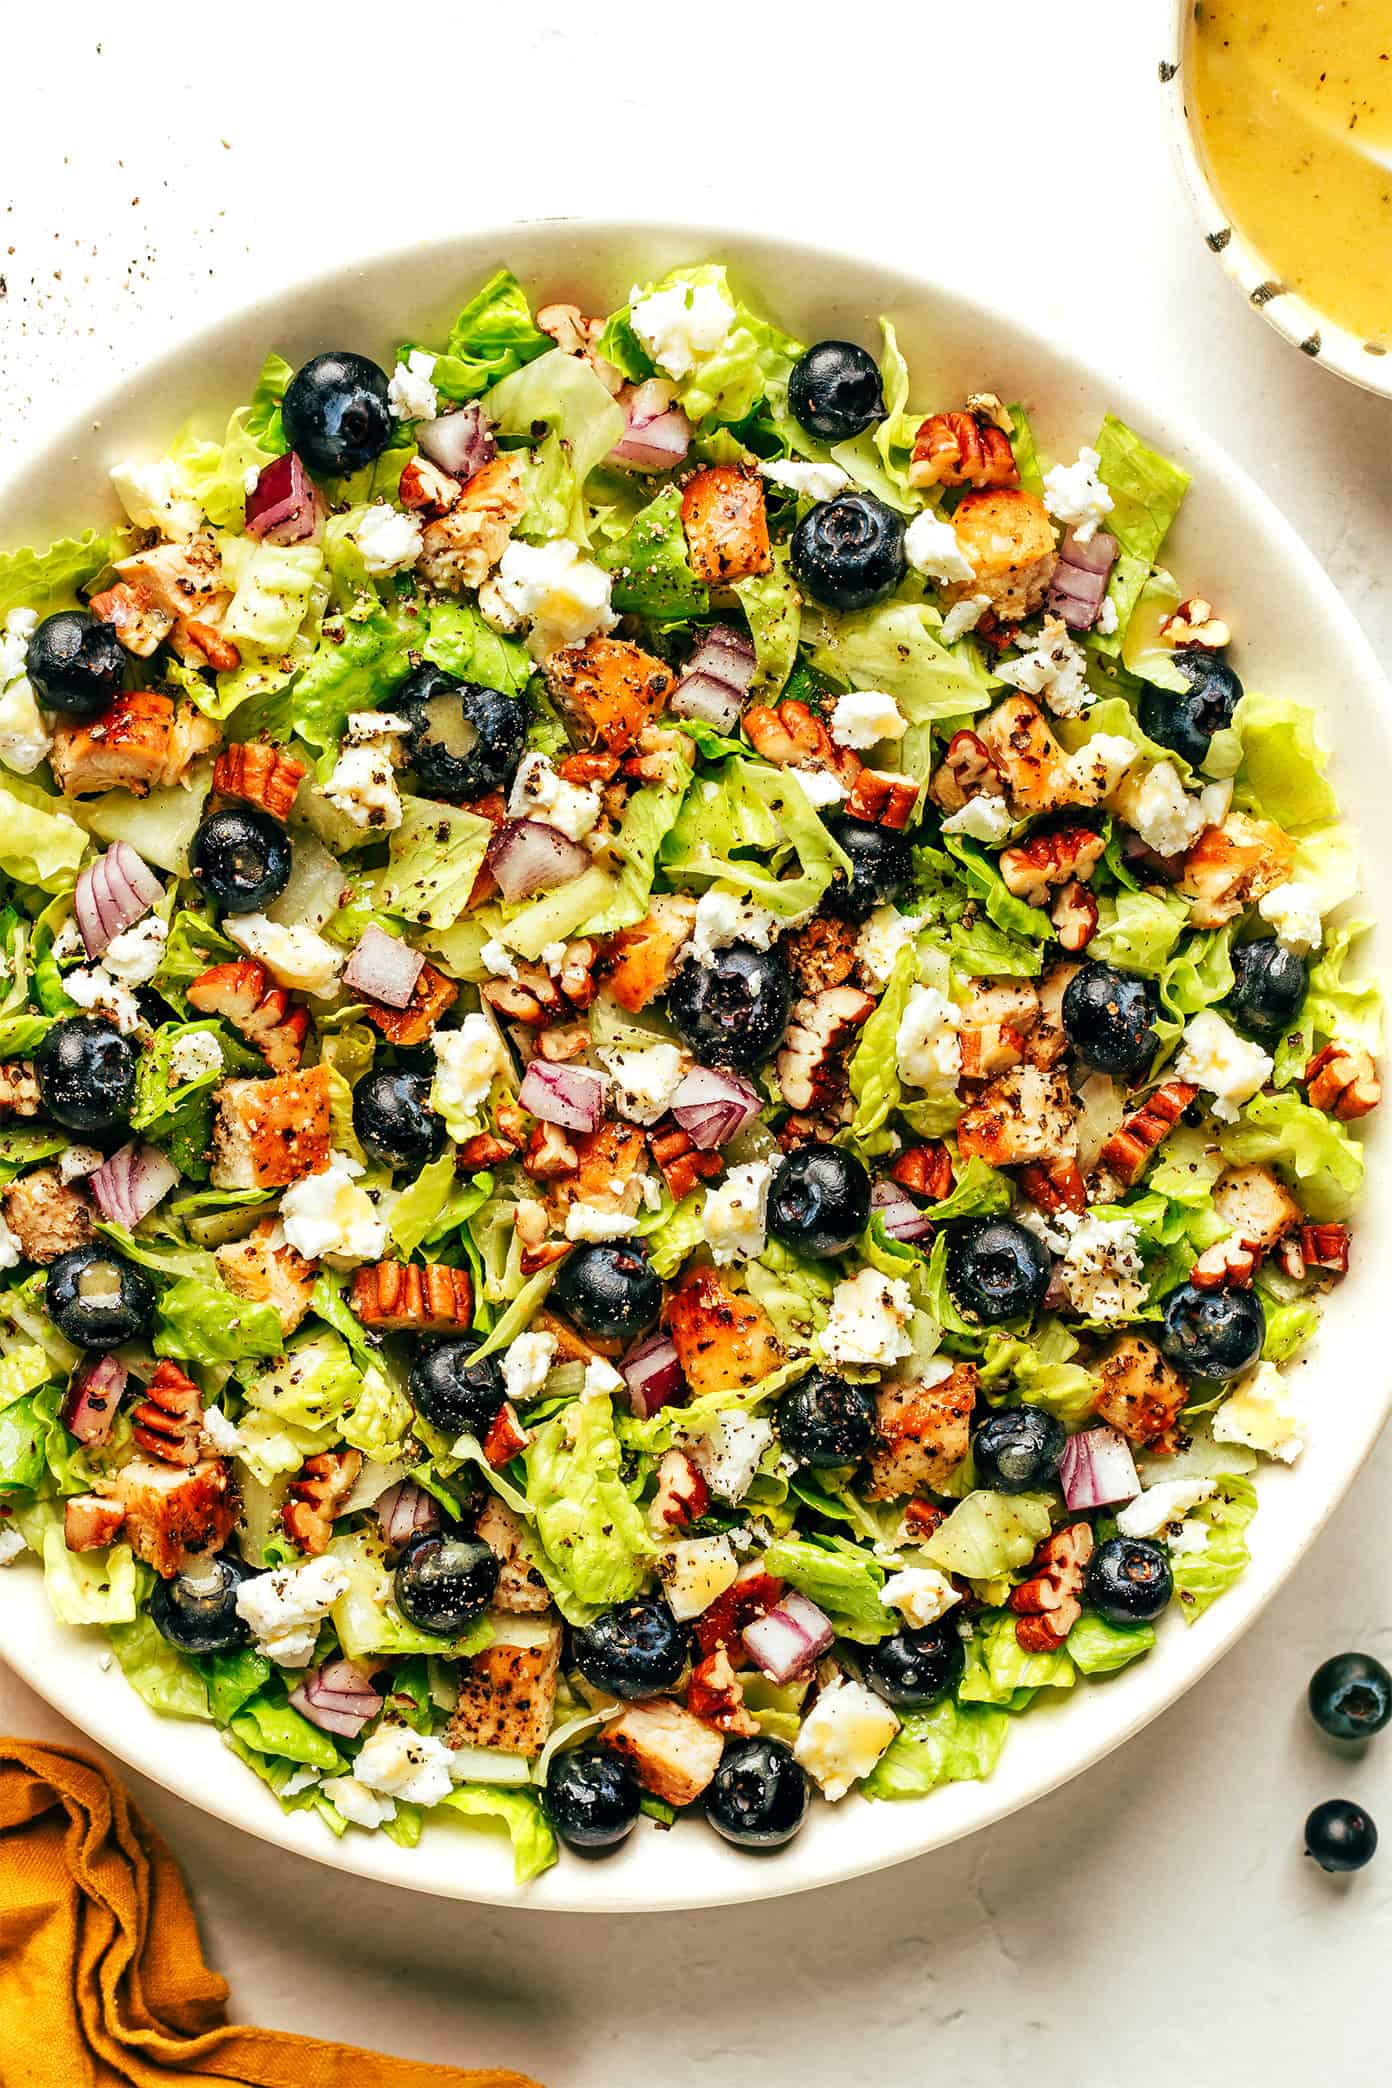 Blueberry Chicken Chopped Salad in Bowl with Lemon Vinaigrette